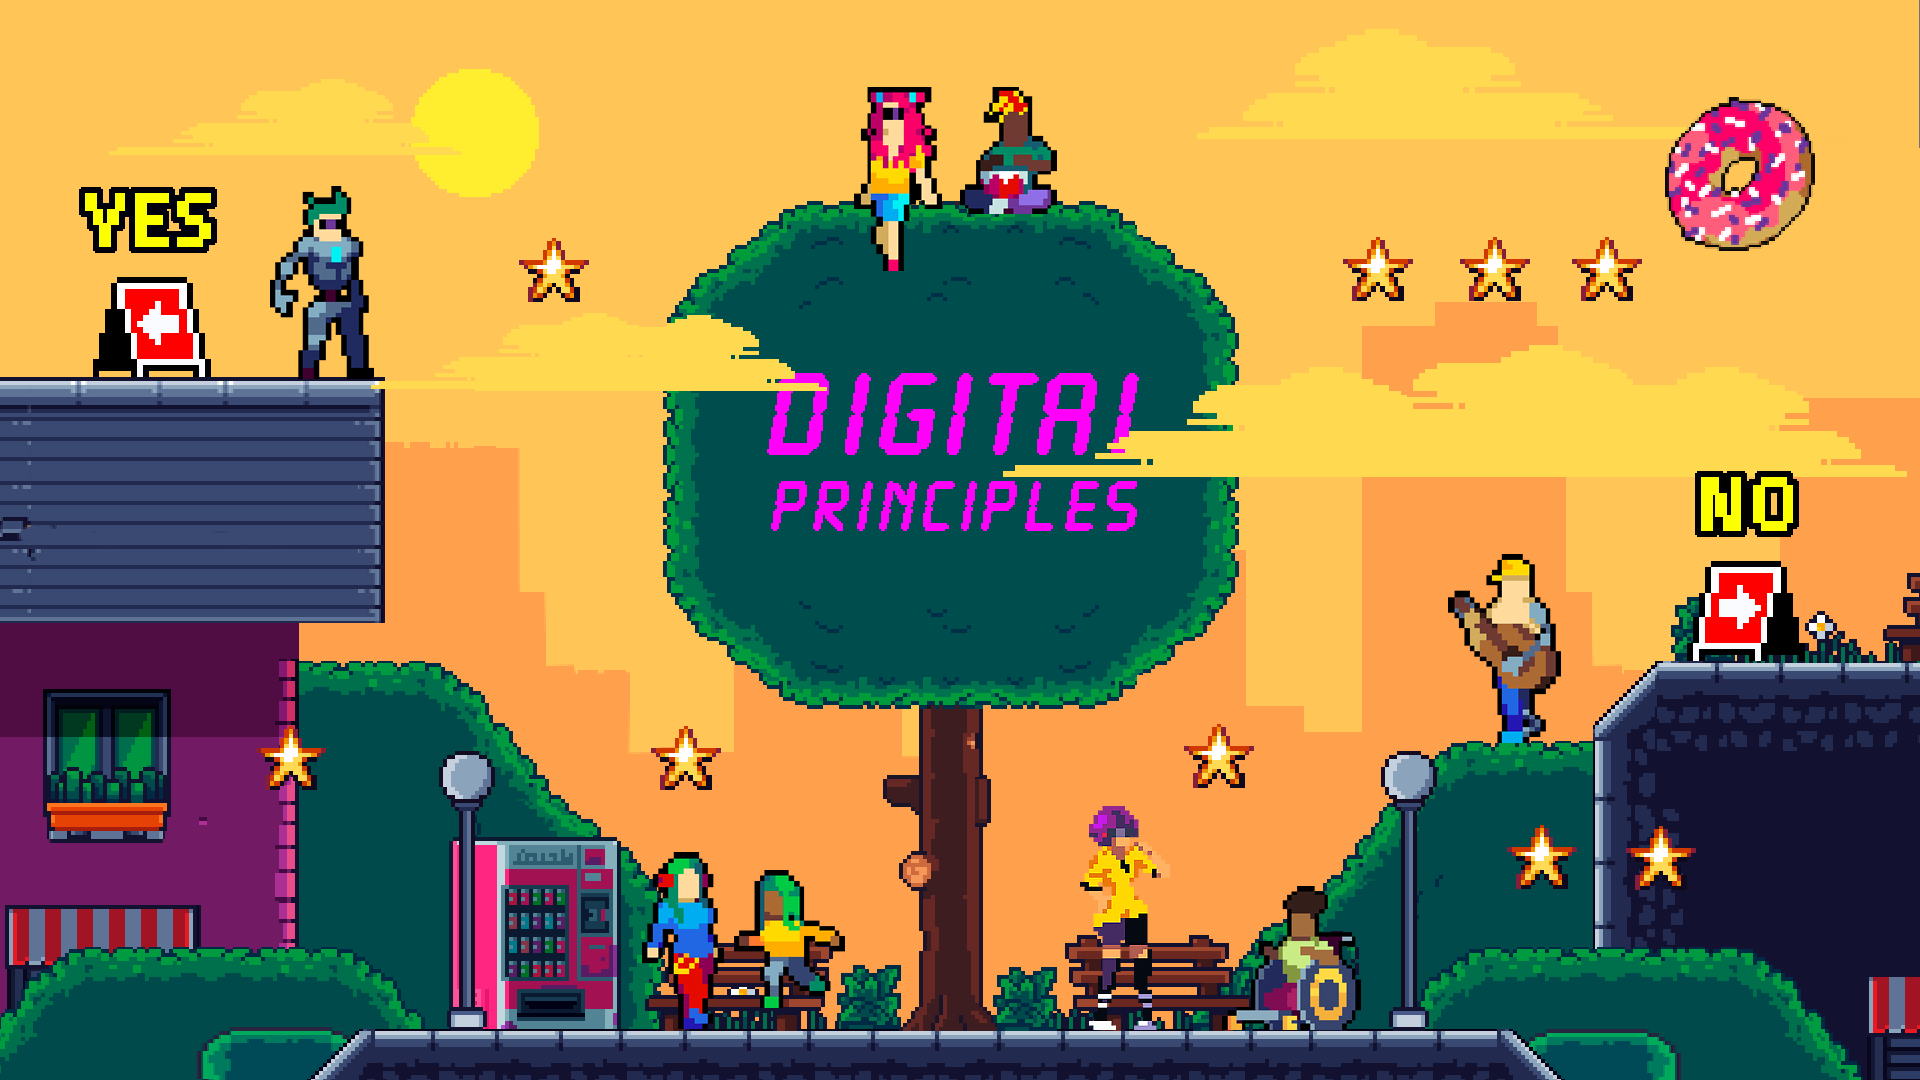 Digitale principes video game poster